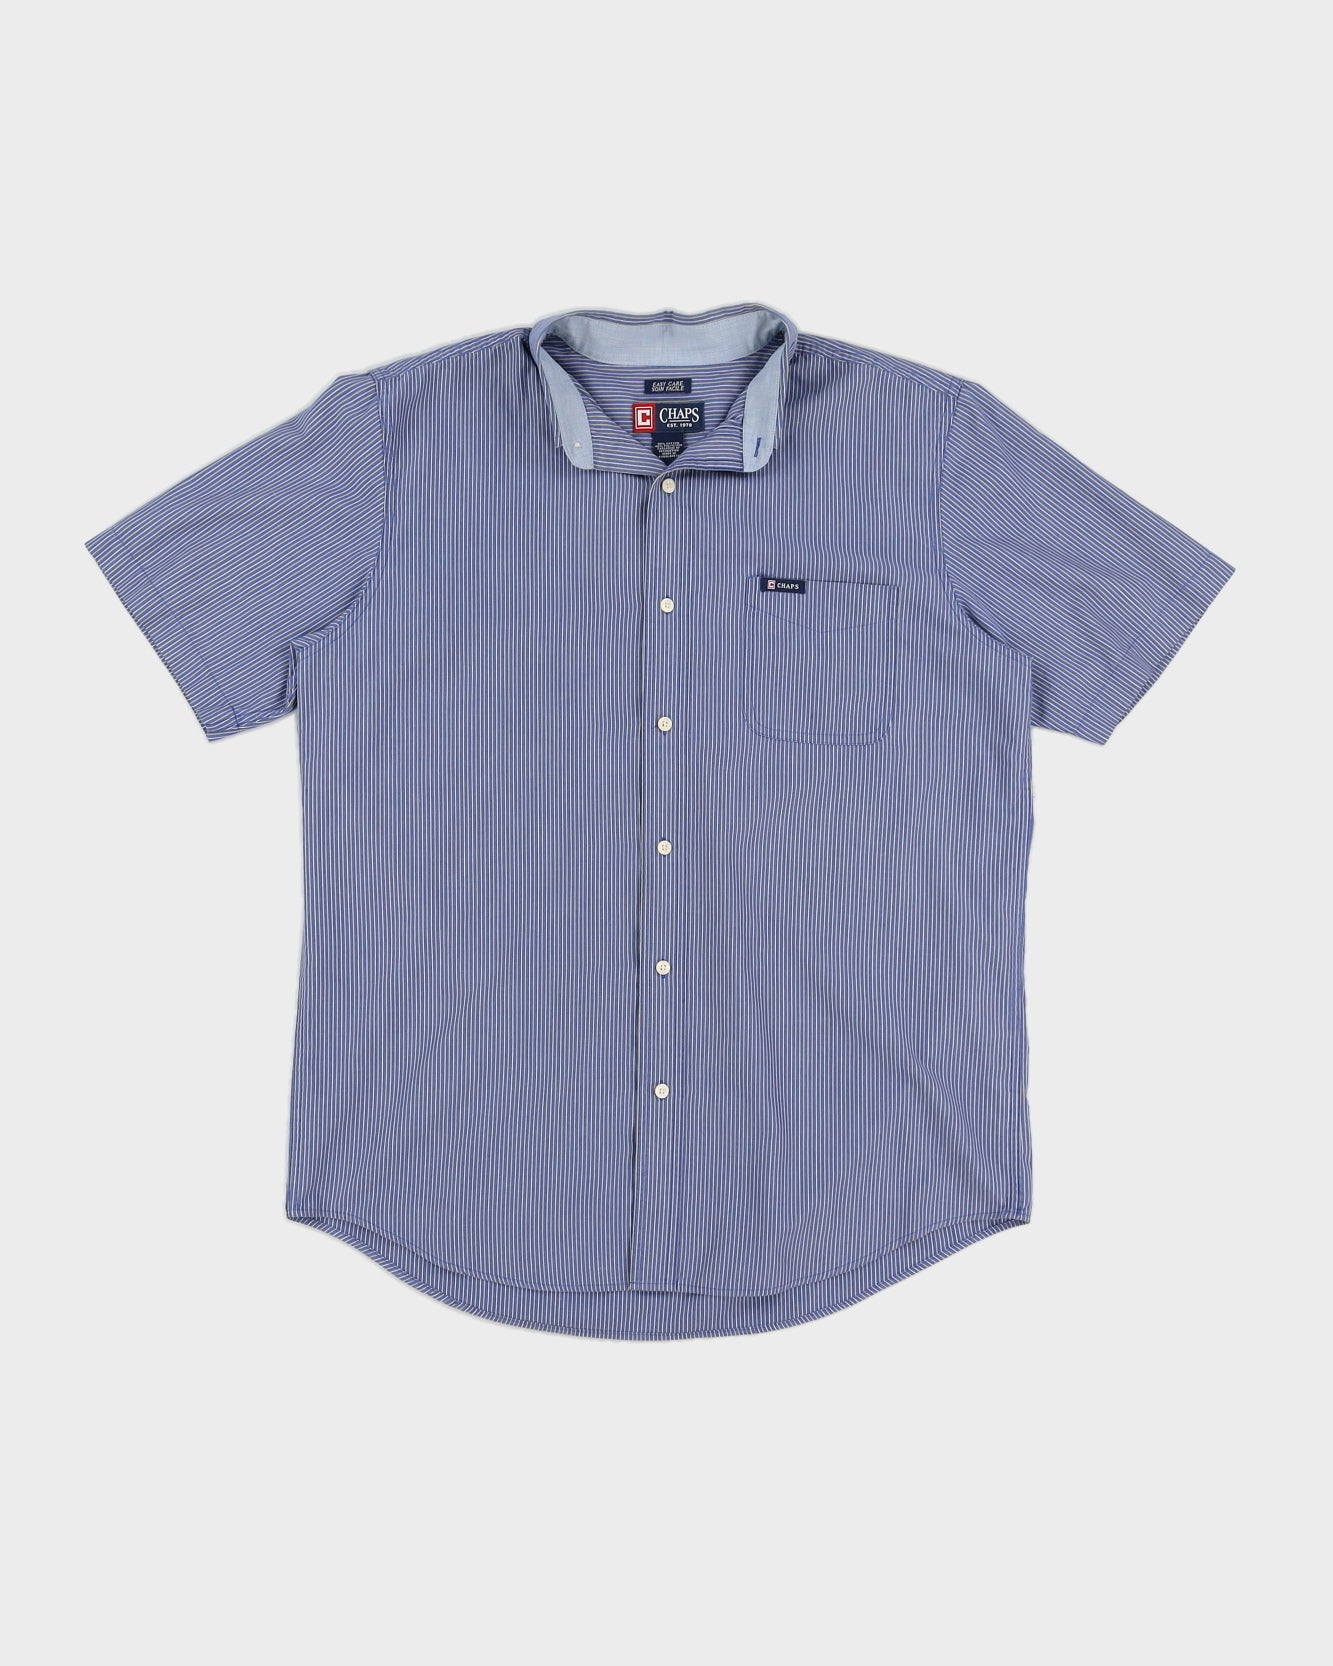 Blue Striped Chaps Shirt - L